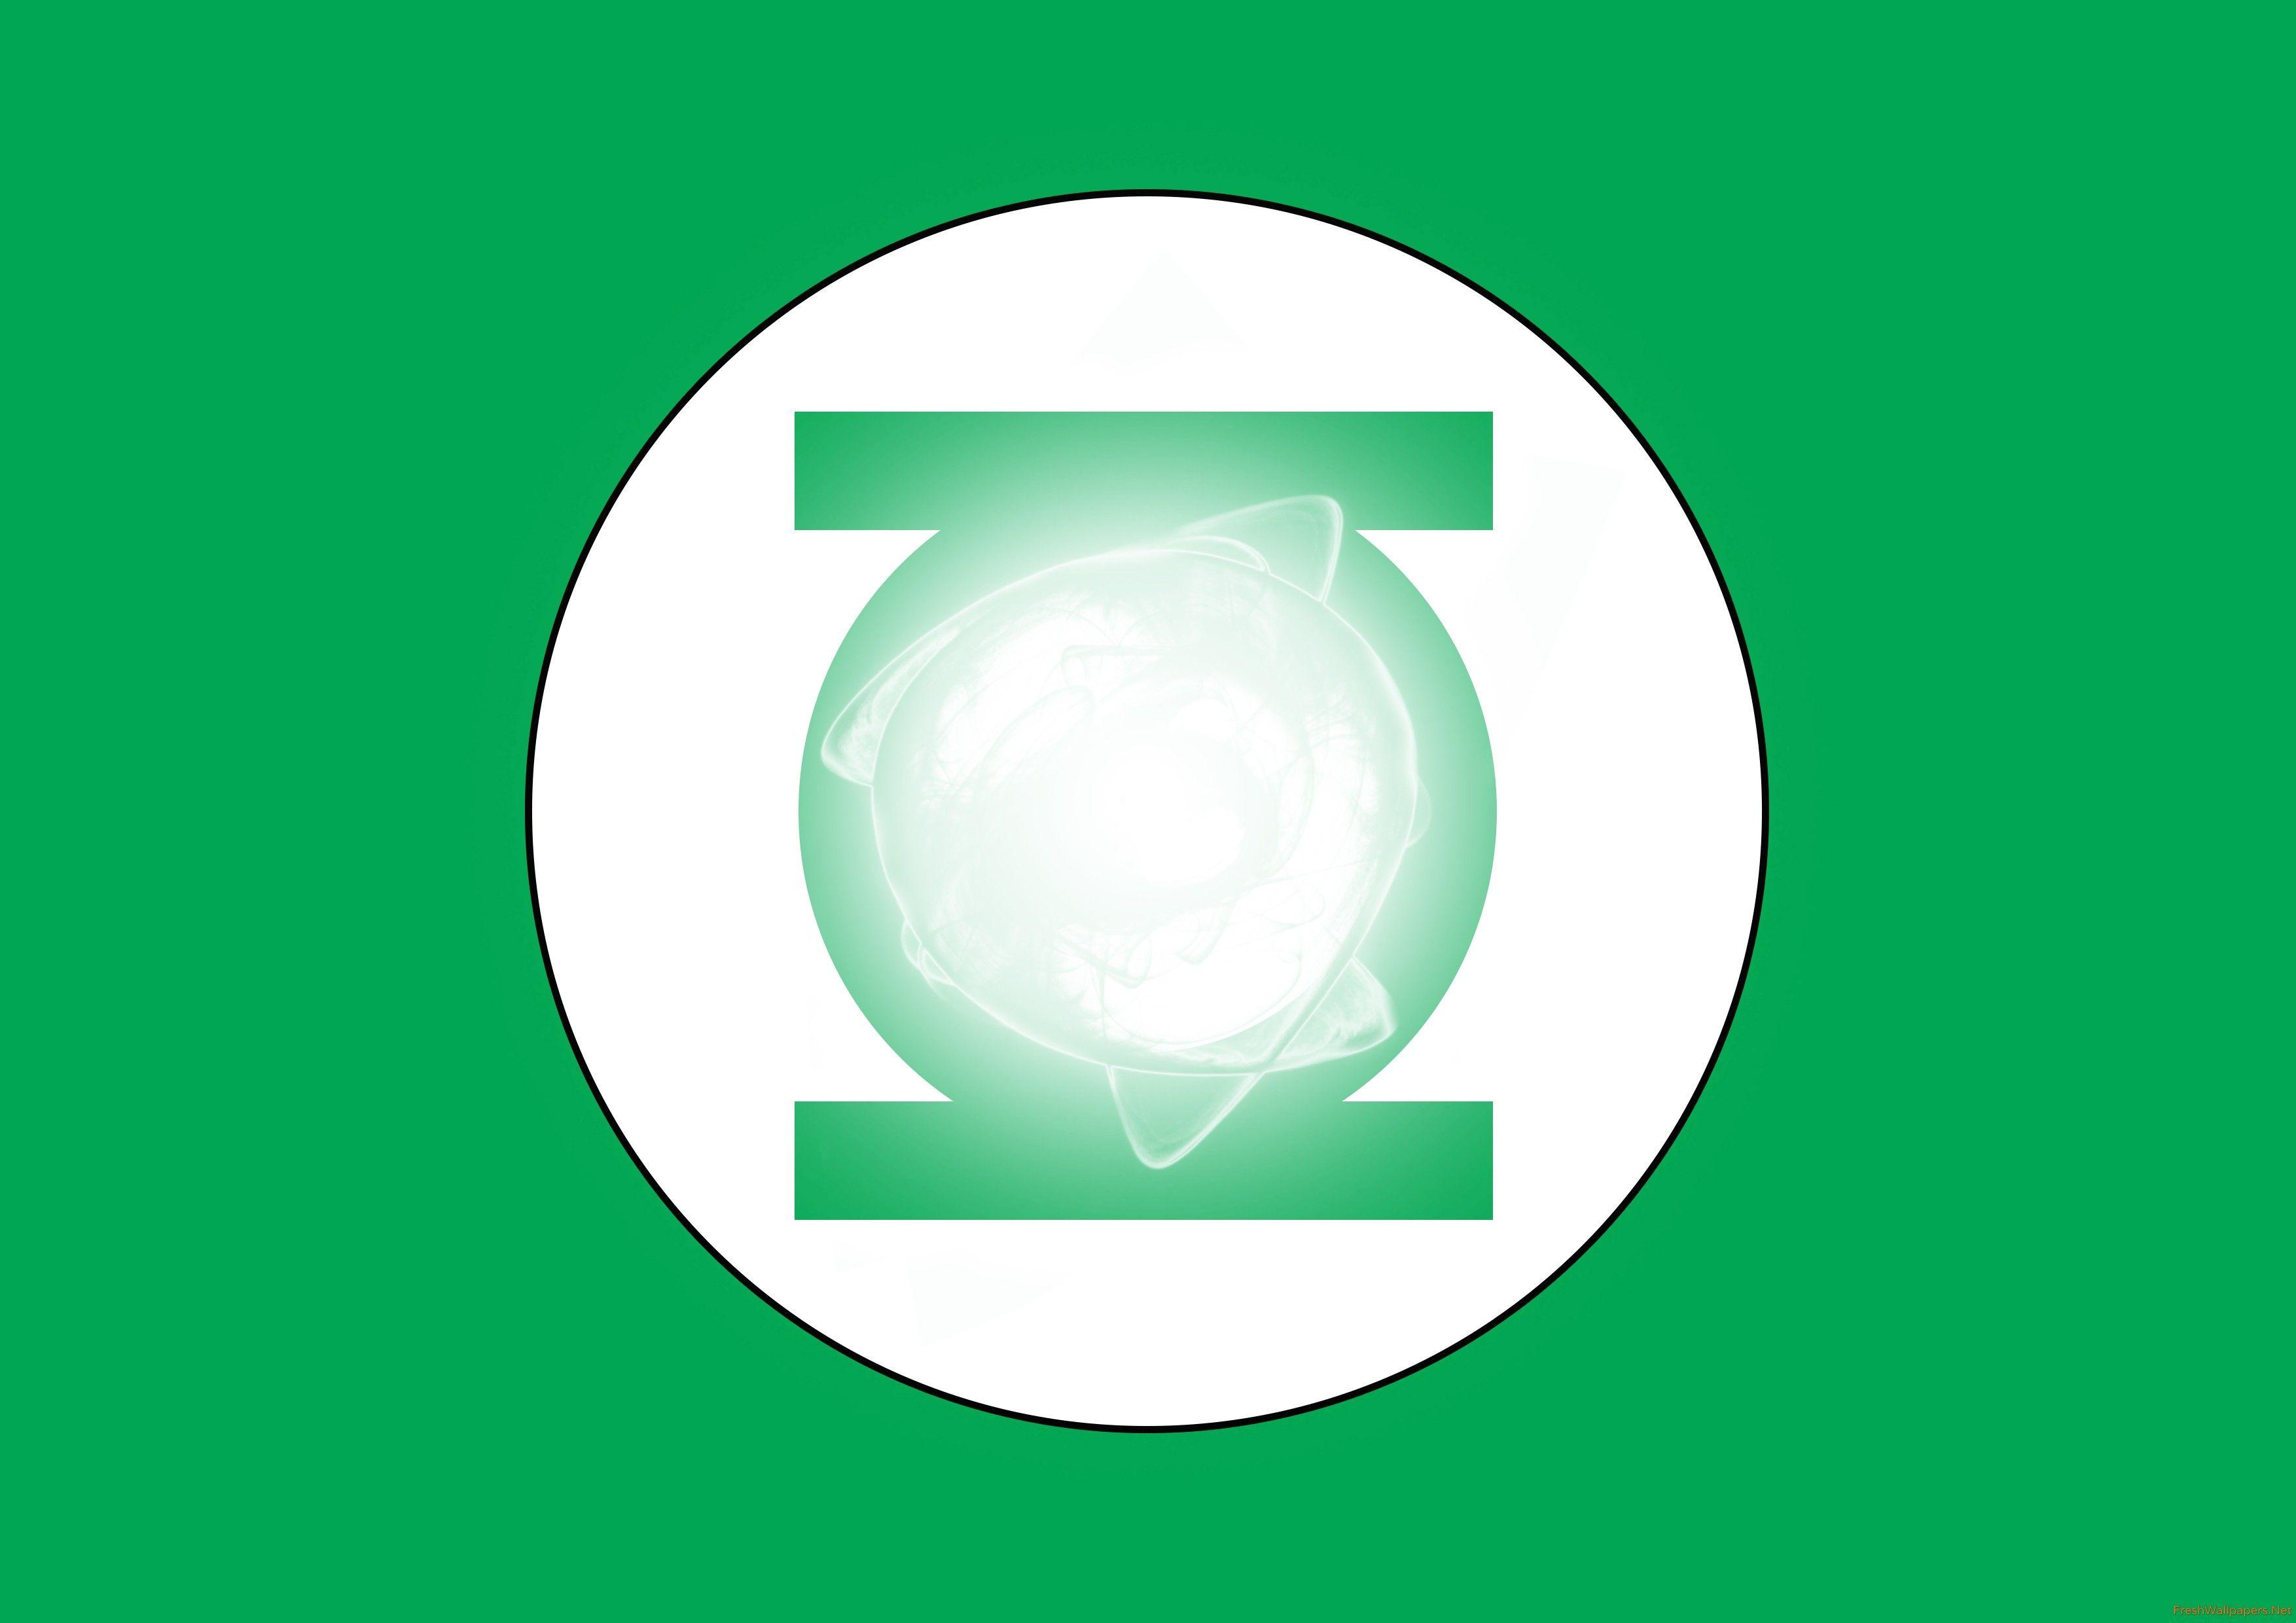 Green lantern logo wallpaper